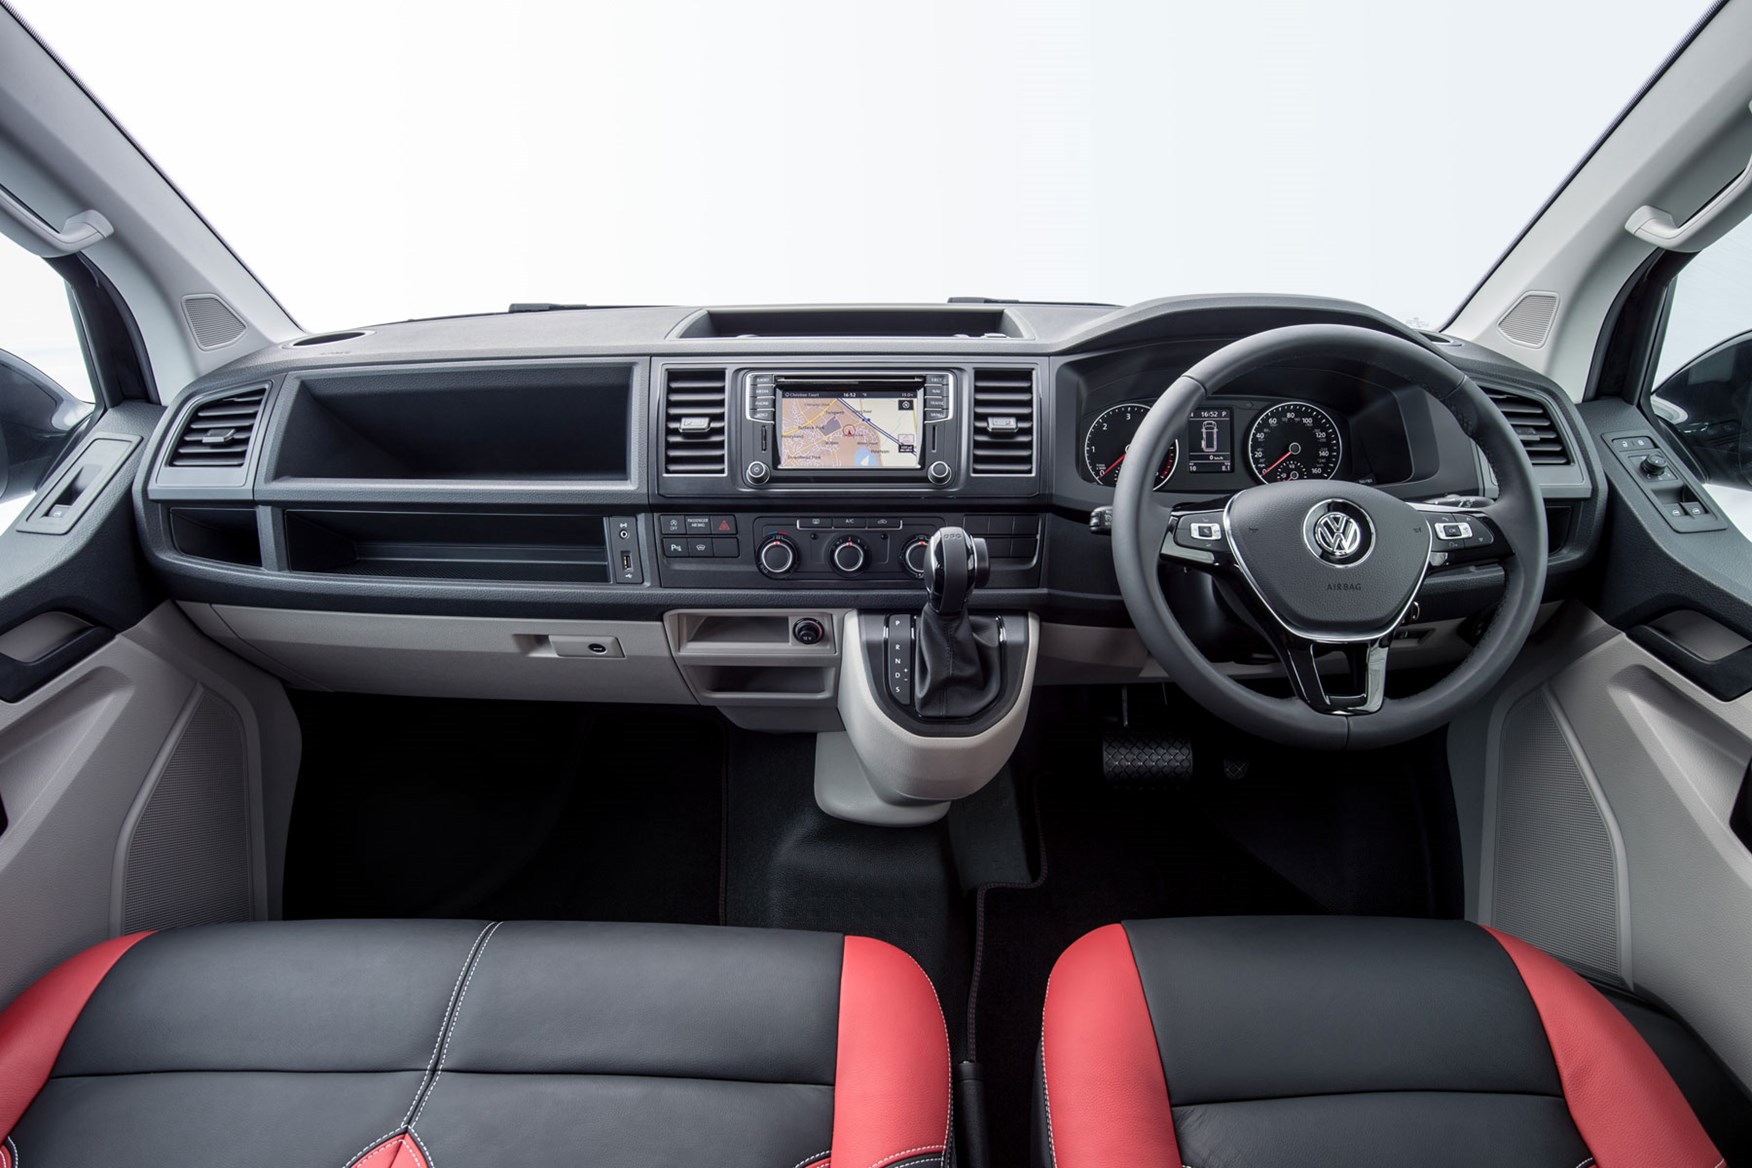 VW Transporter T6 Sportline review - dashboard, cab interior, leather